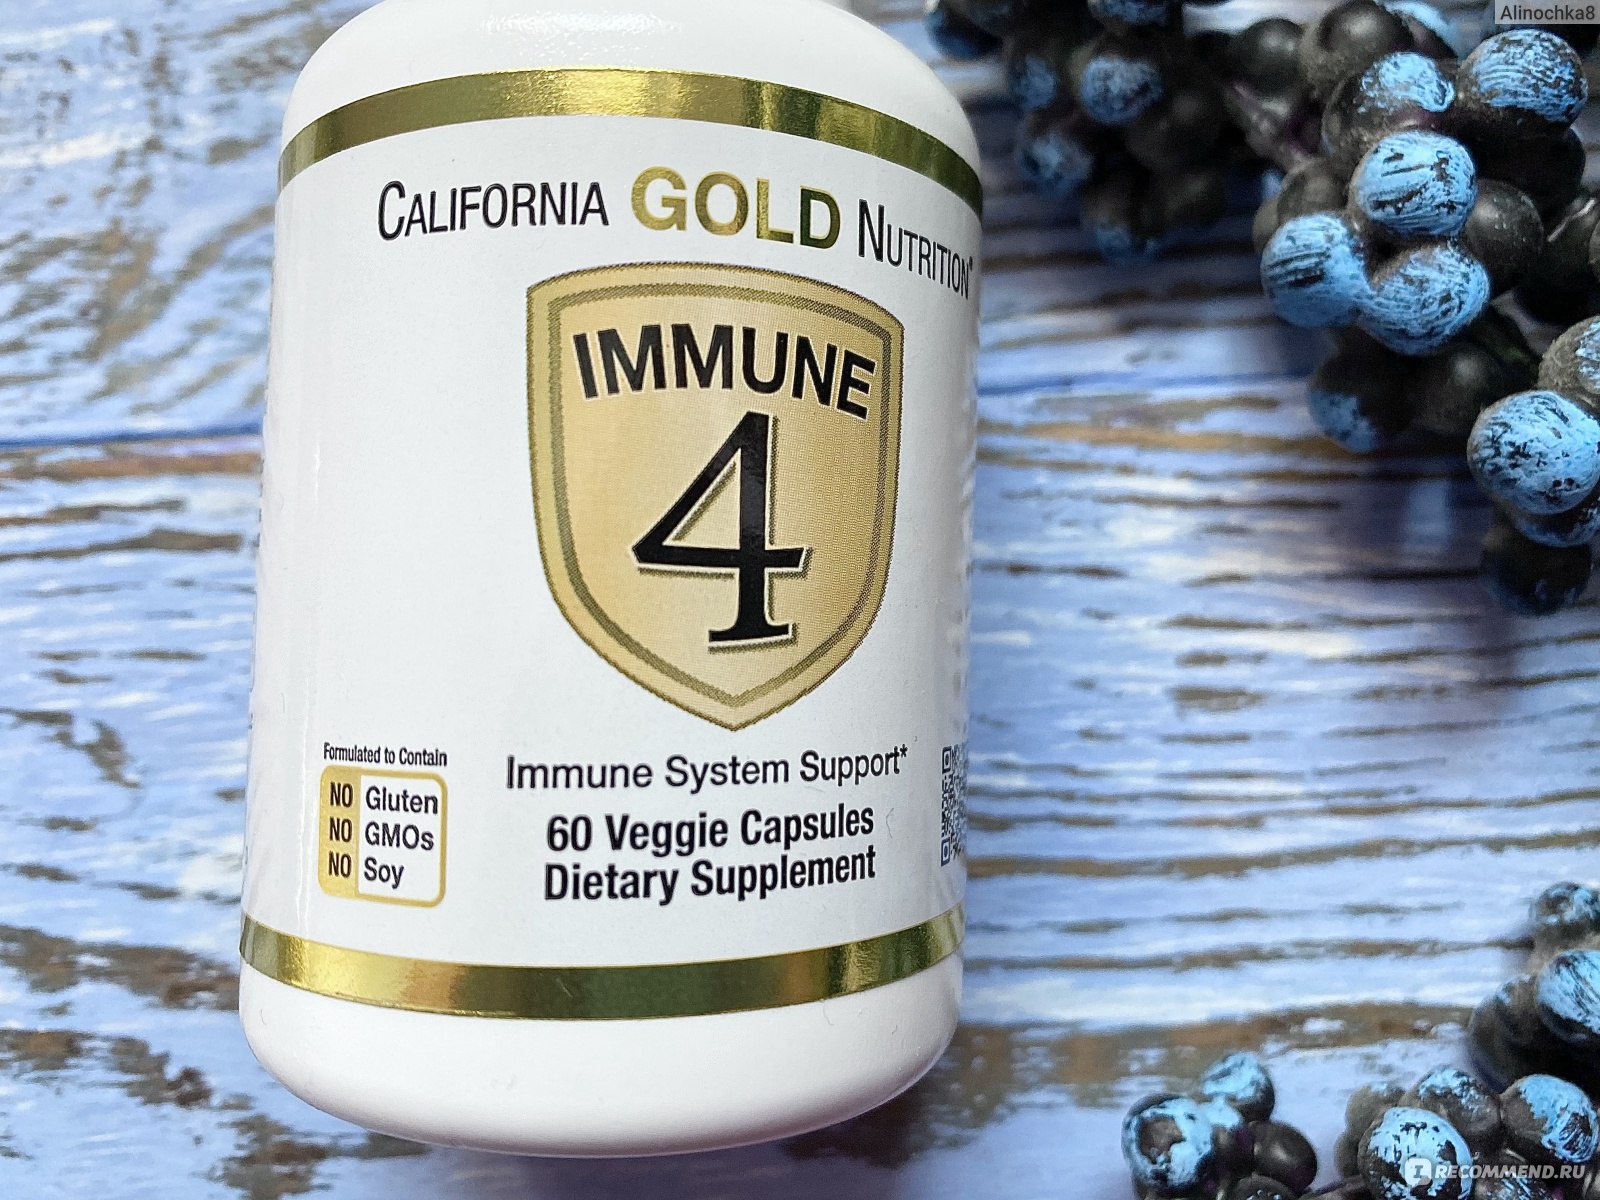 Gold immune 4. California Gold Nutrition immune 4 60 капсул. California Gold Nutrition immune 4 капсулы. Иммун 4 айхерб. California Gold Nutrition, immune 4, 60 Veggie Capsules.